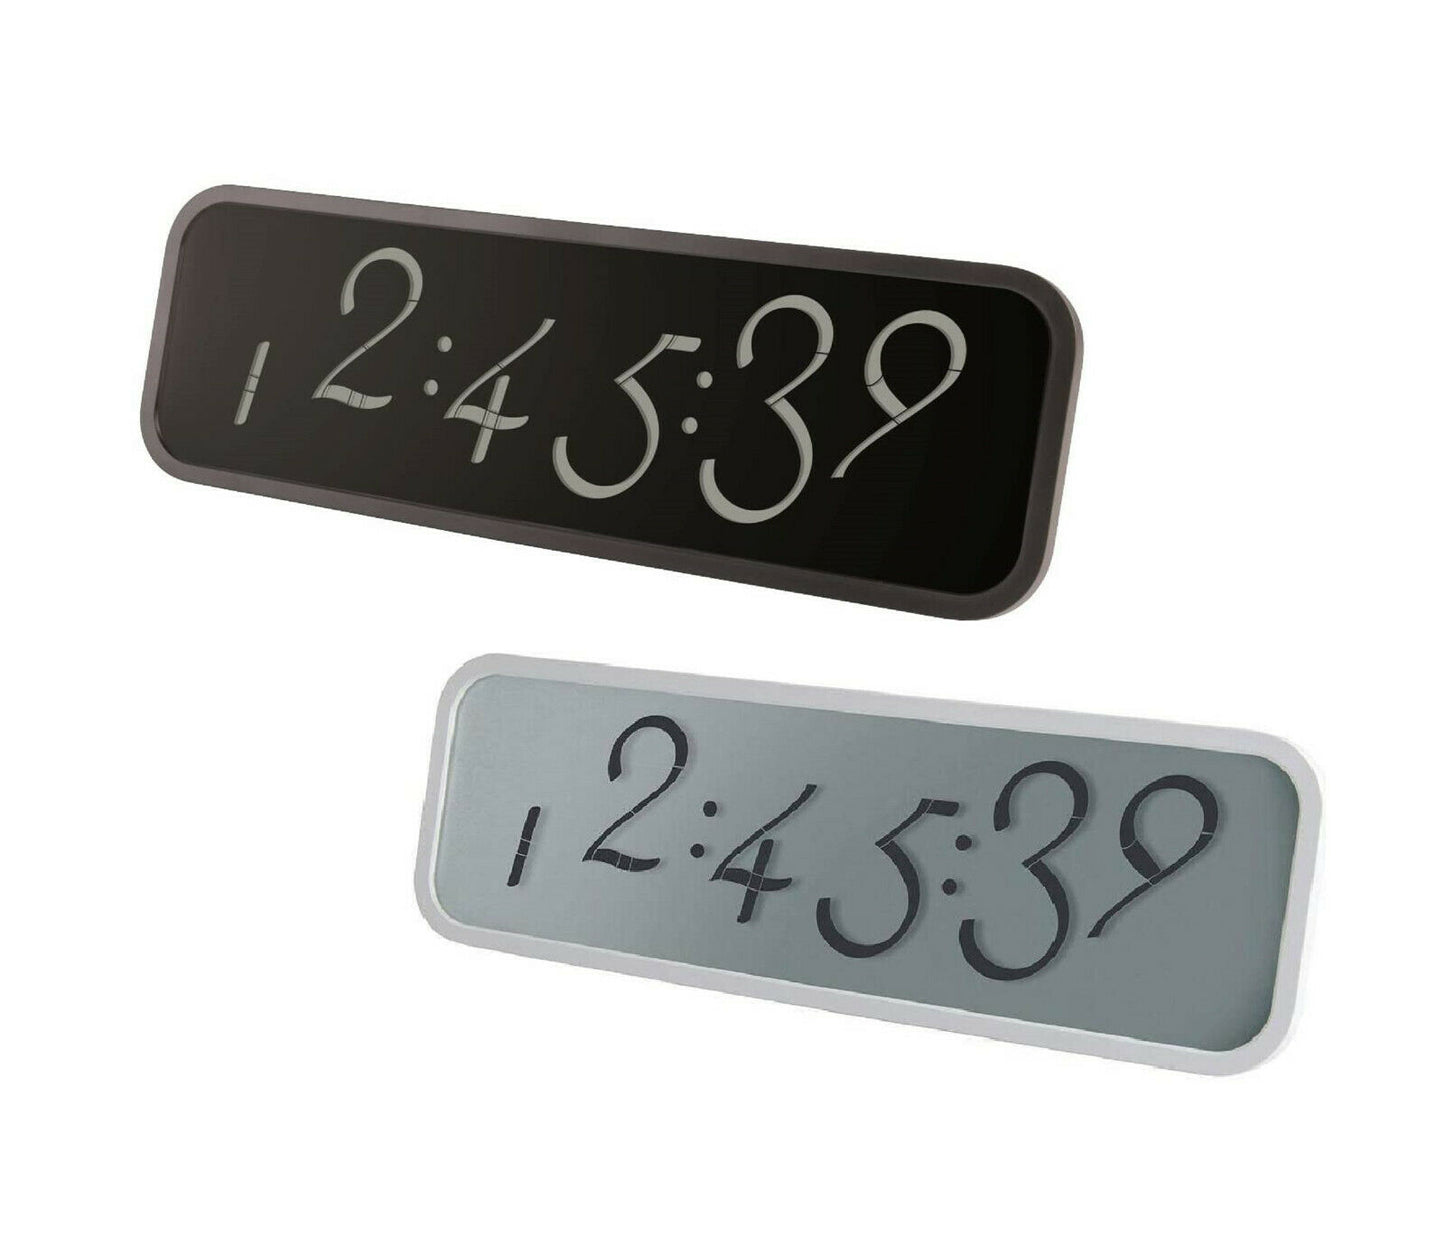 Lexon LCD Wanduhr Tischuhr Script LR134W & LR134N - schwarz & weiß - L: 33,4 cm